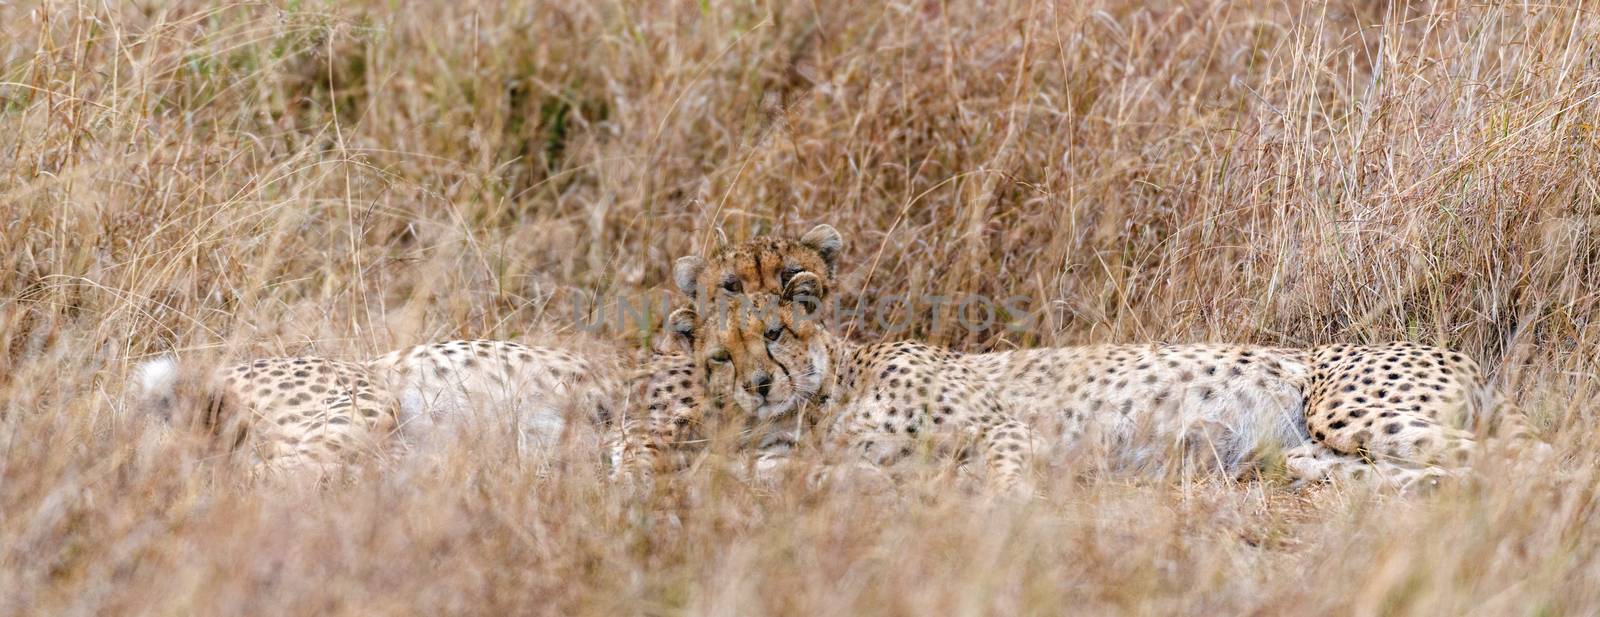 African cheetahs by snafu